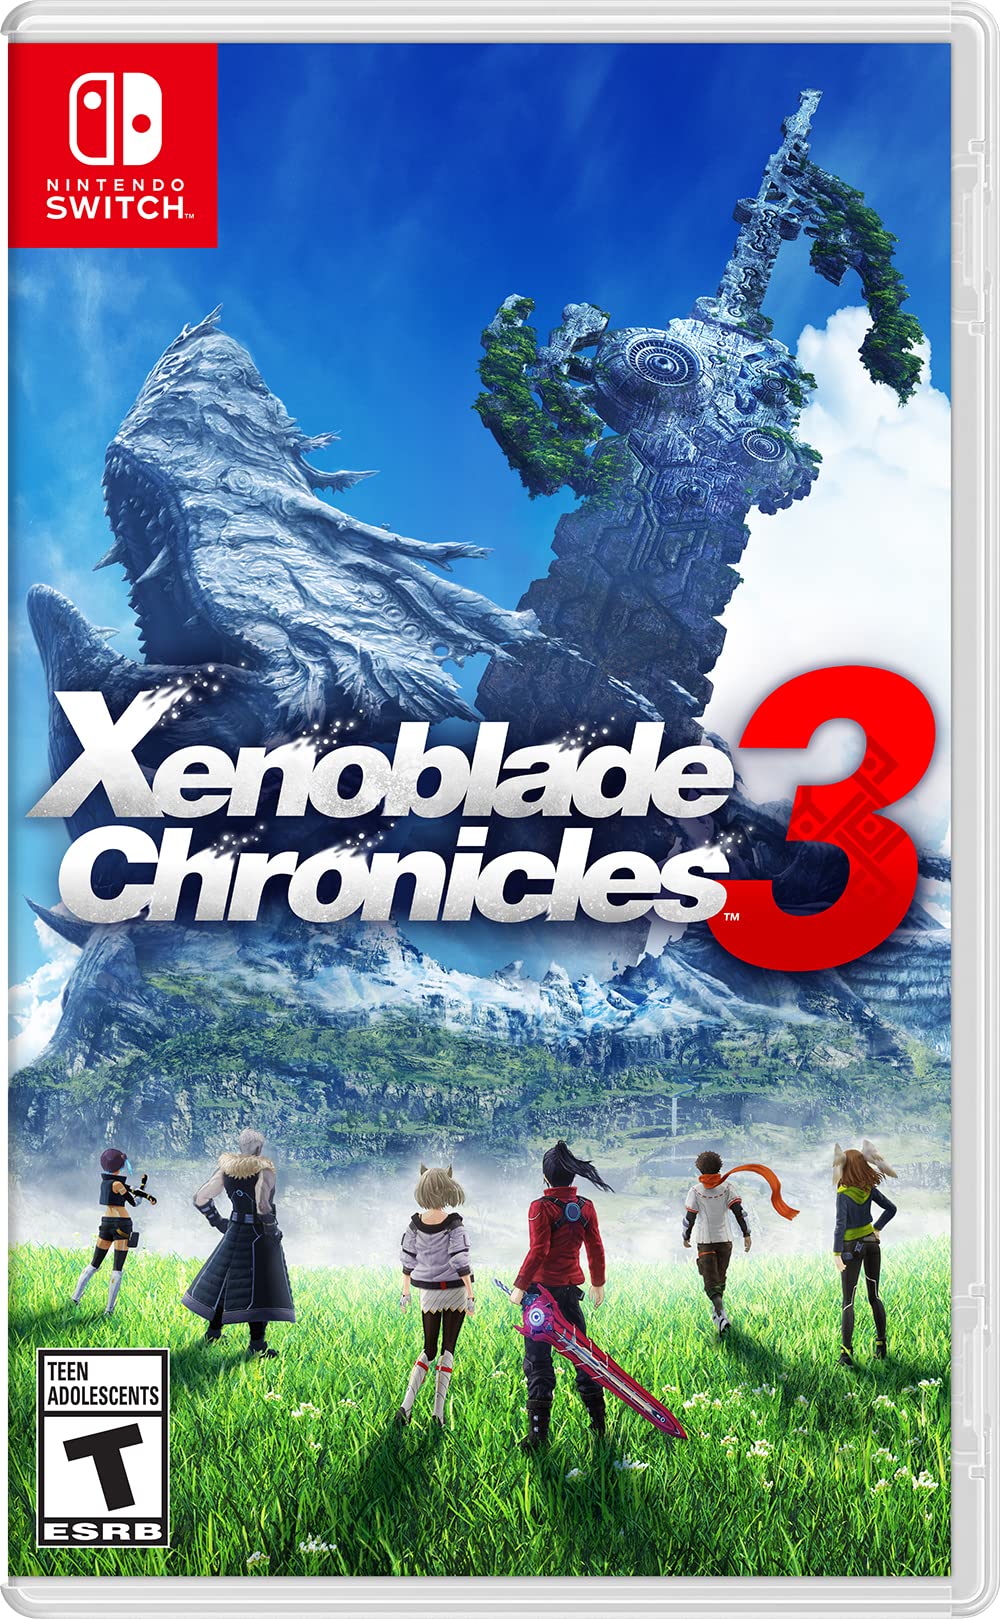 Xenoblade Chronicles 3 [Standard Edition] - Nintendo Switch $49.99